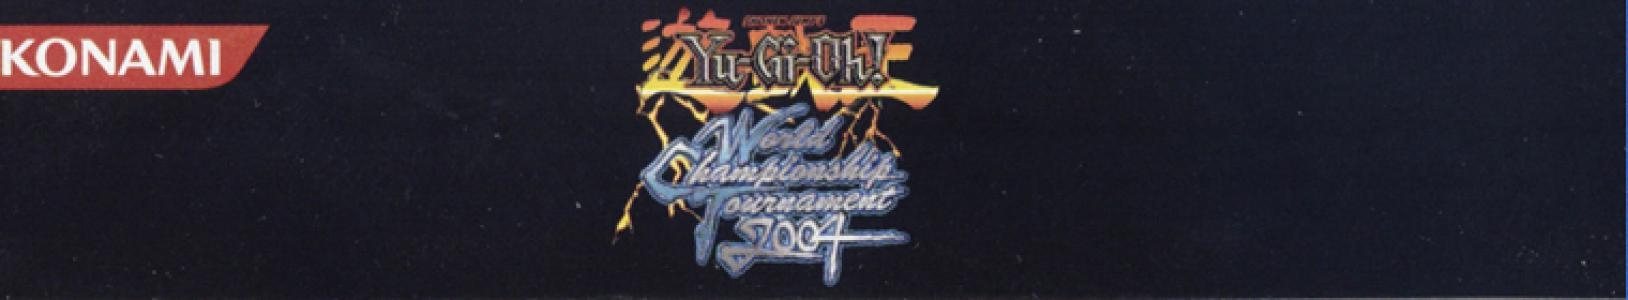 Yu-Gi-Oh! World Championship Tournament 2004 banner